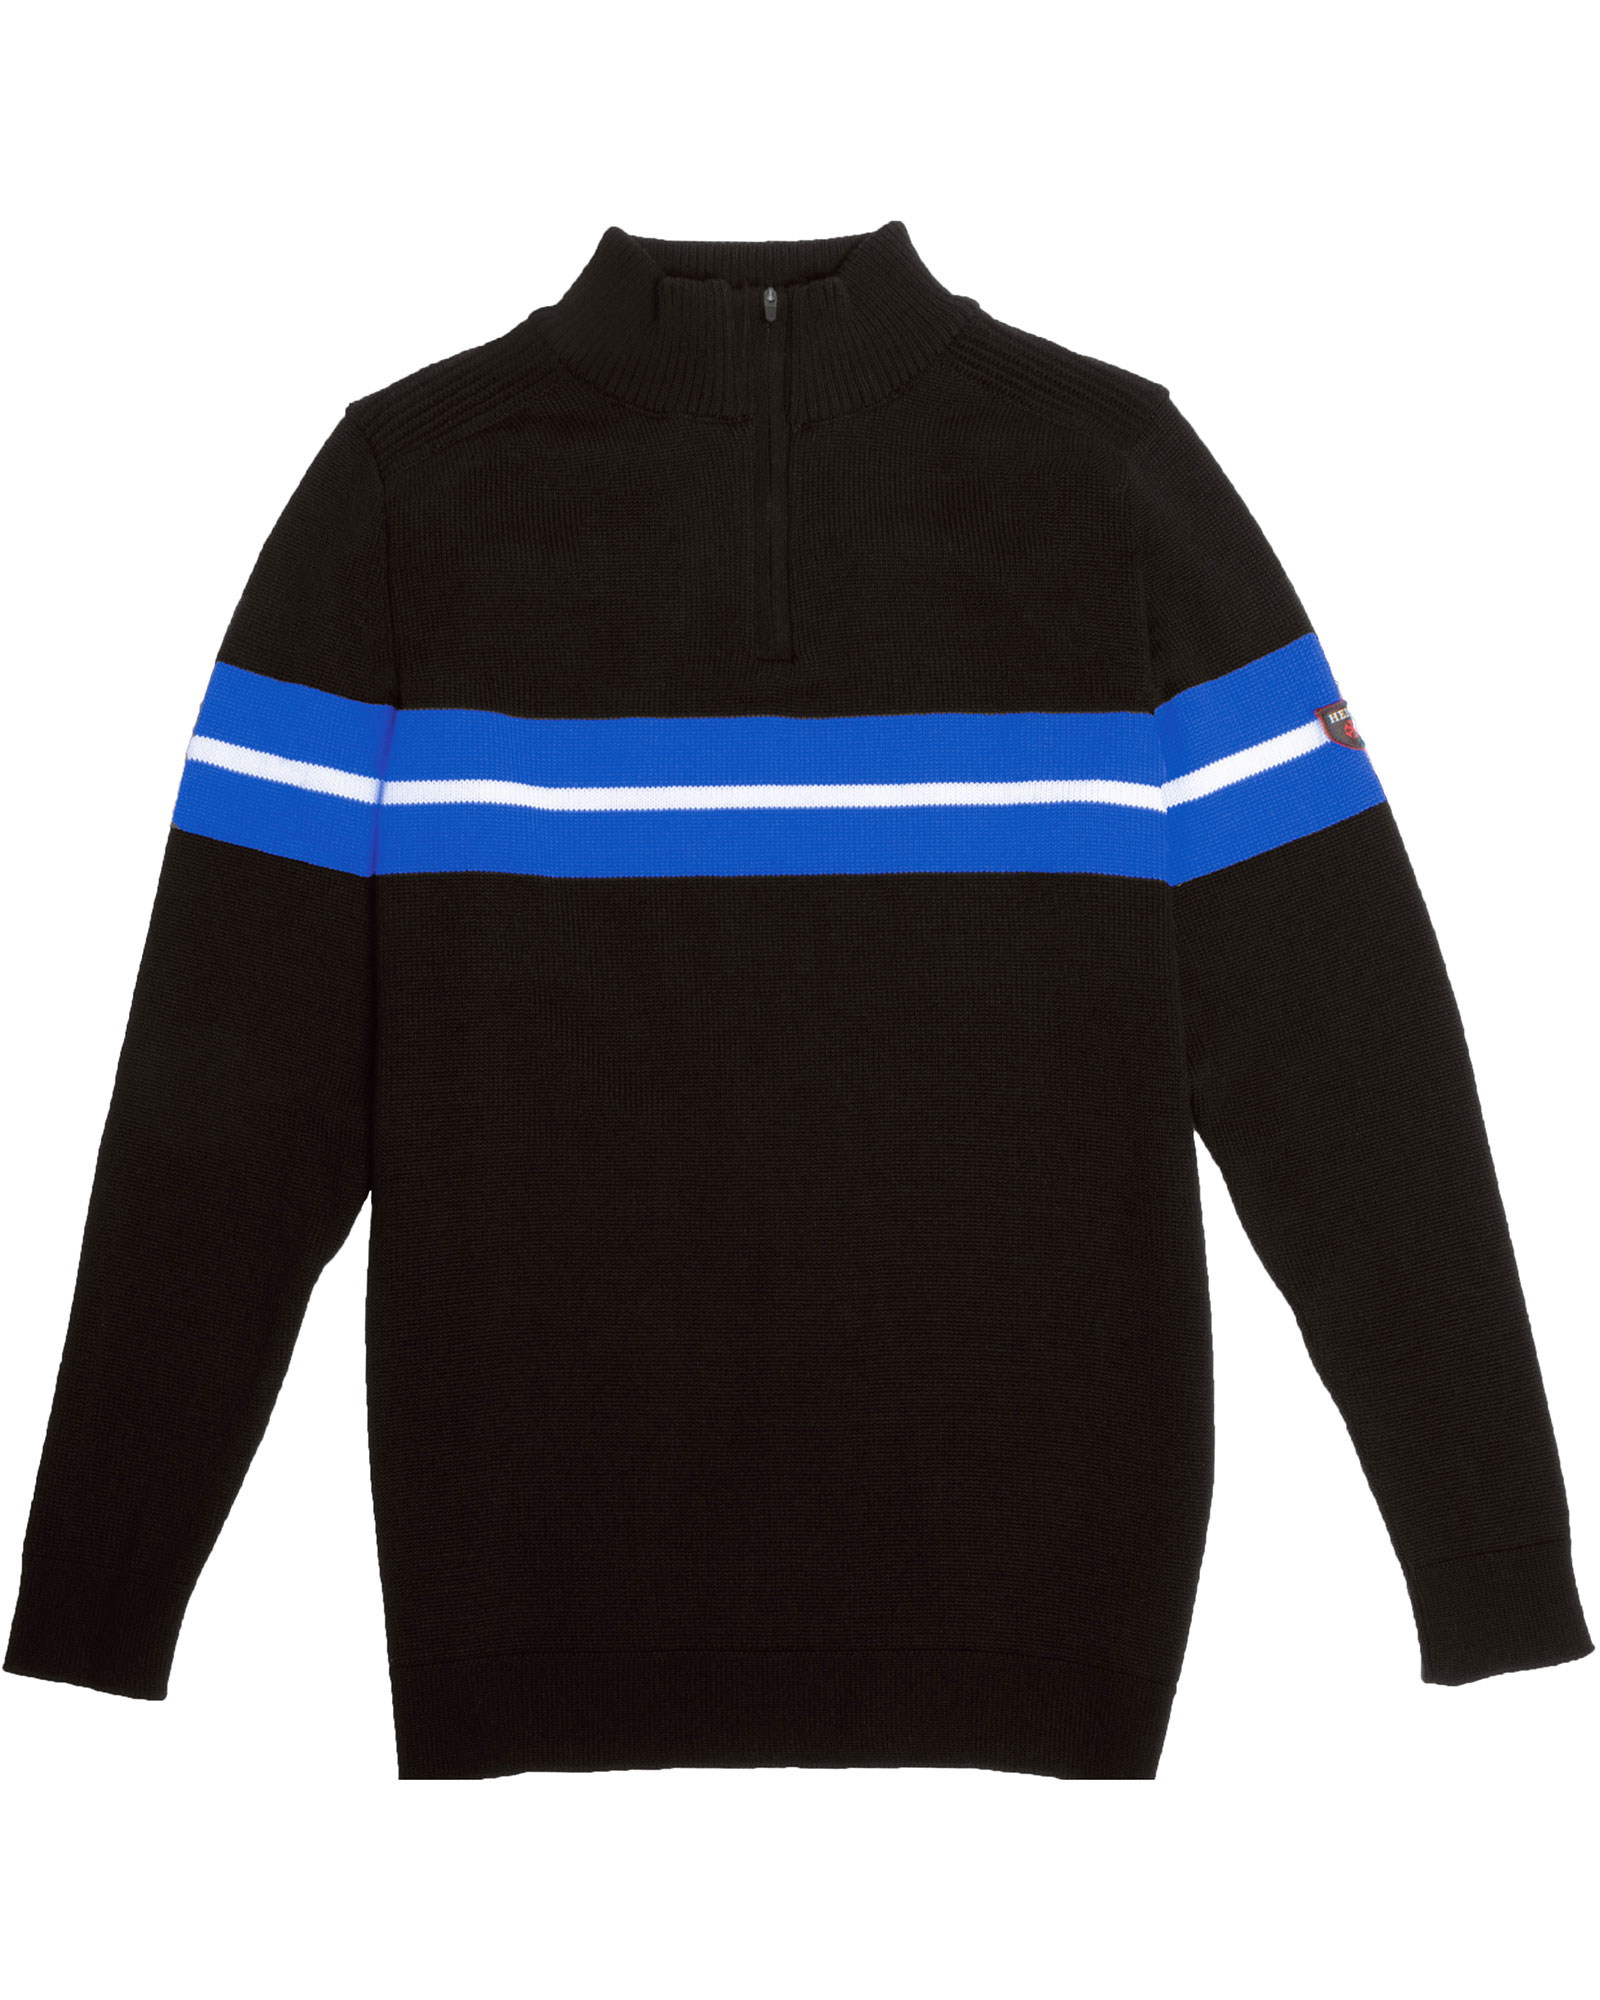 Henjl Carve Half Zip Men’s Merino Sweater - Black/Snow/Bright Blue L